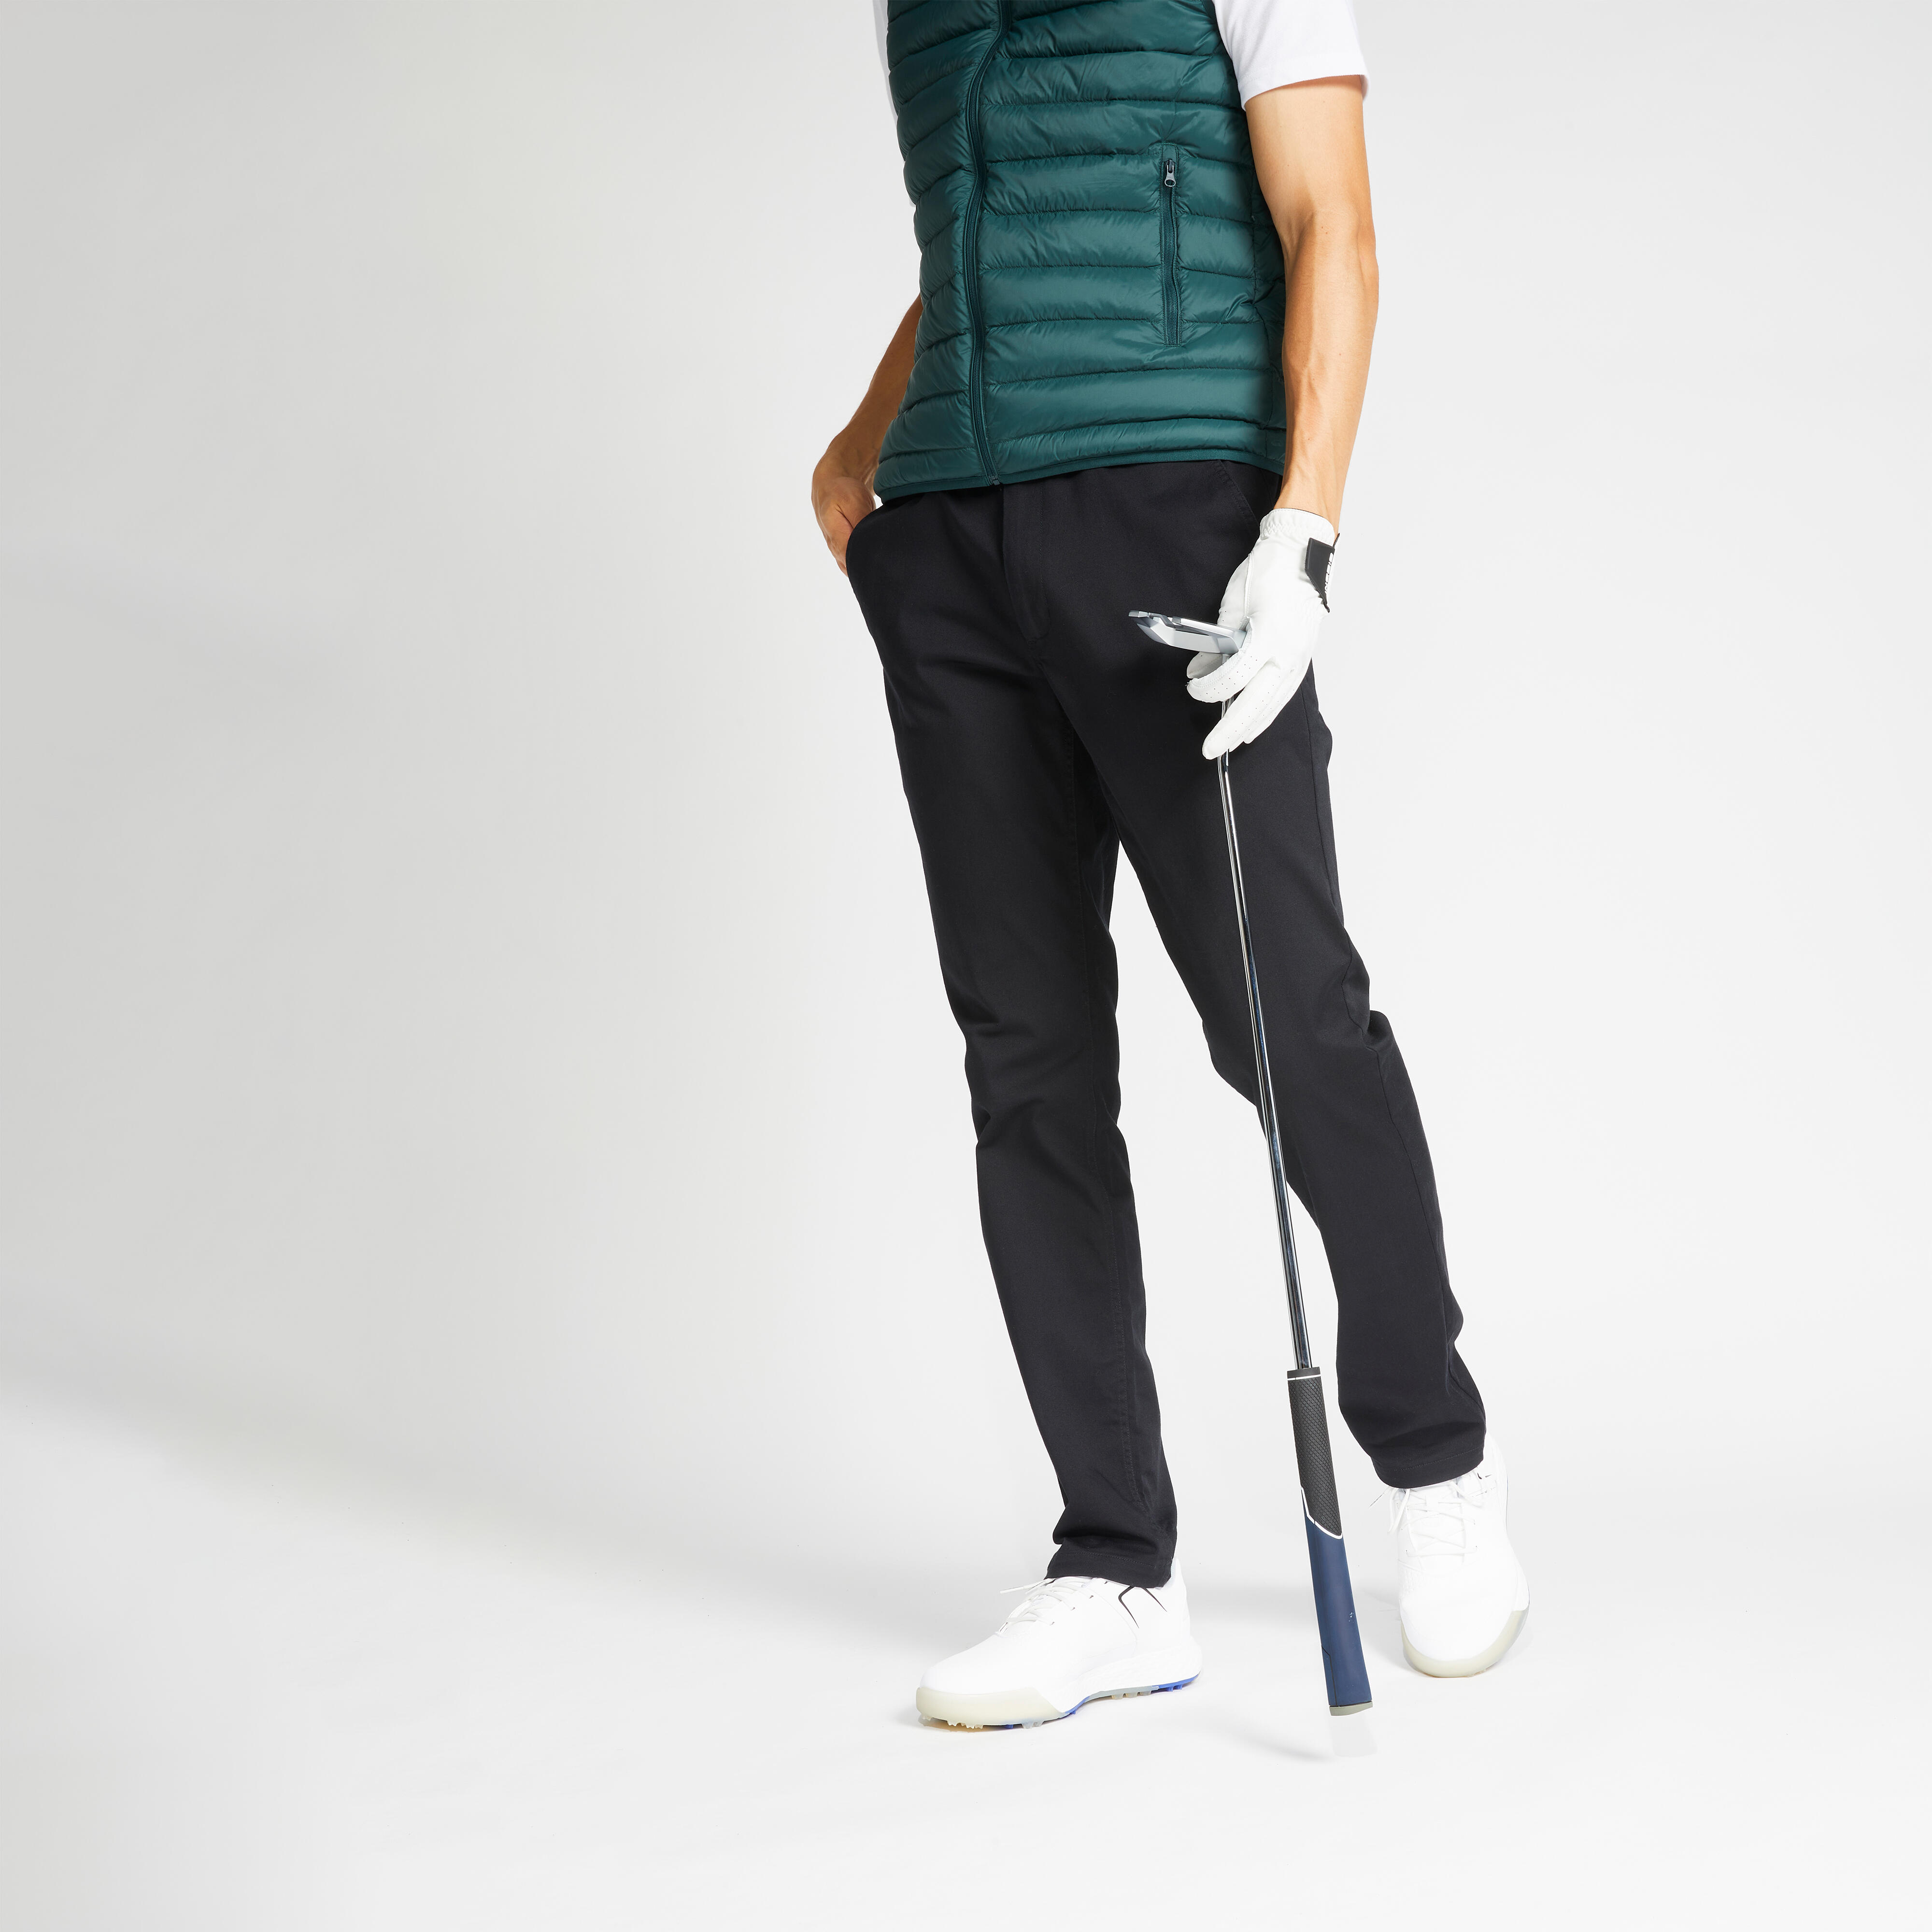 Rdruko Men's Stretch Golf Pants Quick Dry Lightweight Casual Dress Pants  with Pockets(Dark Gray,US 36) - Walmart.com